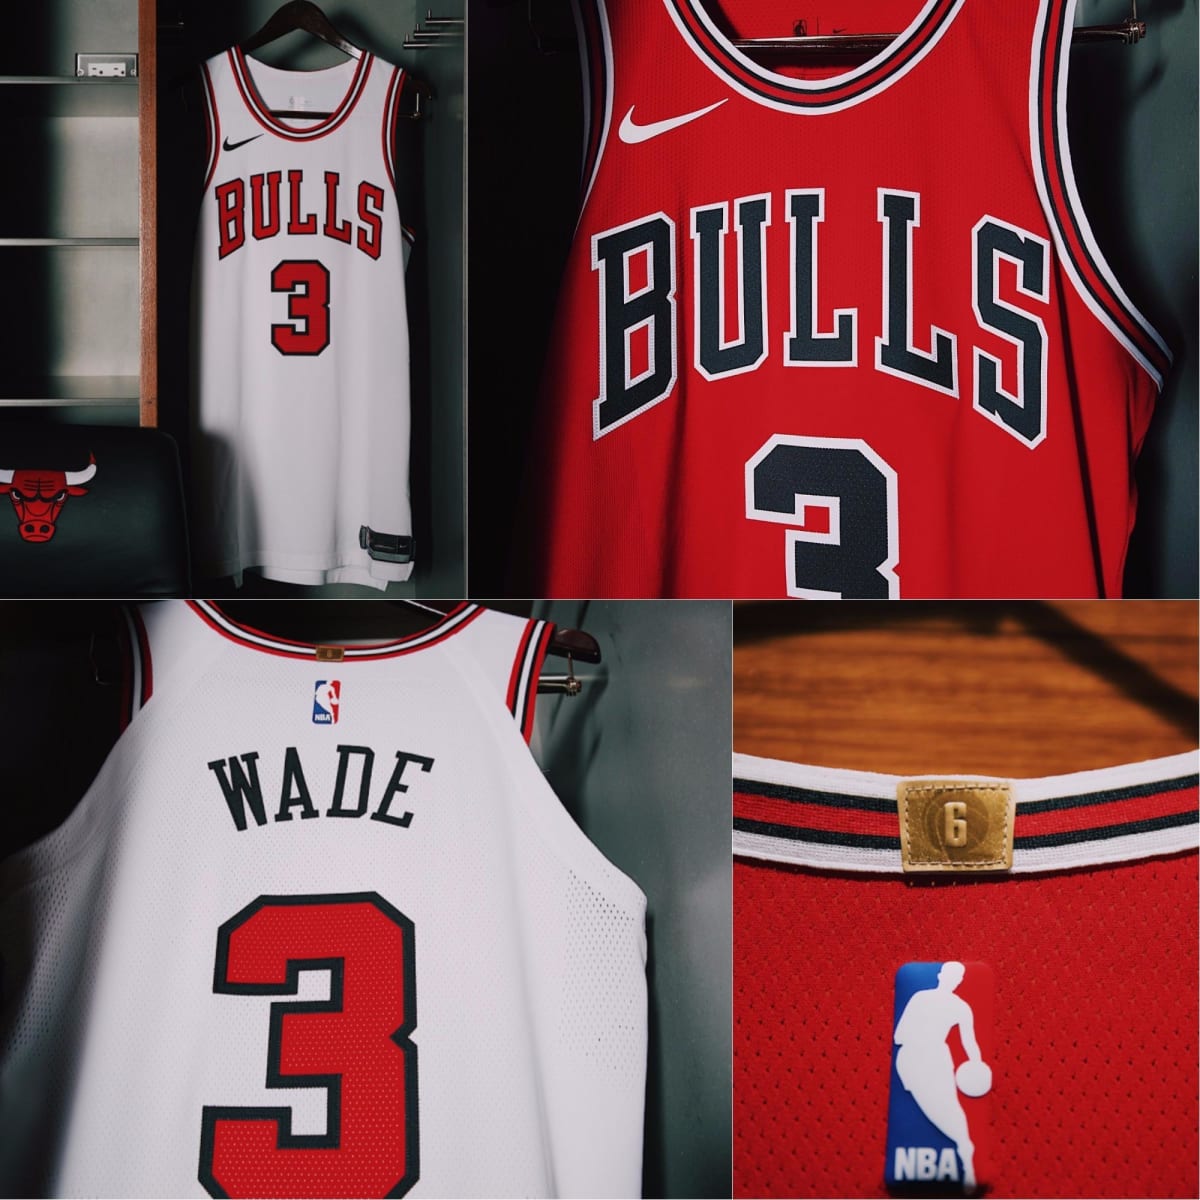 Nike Chicago Bulls Uniform - Every 2017 Nike NBA Jersey So Far | Sole Collector